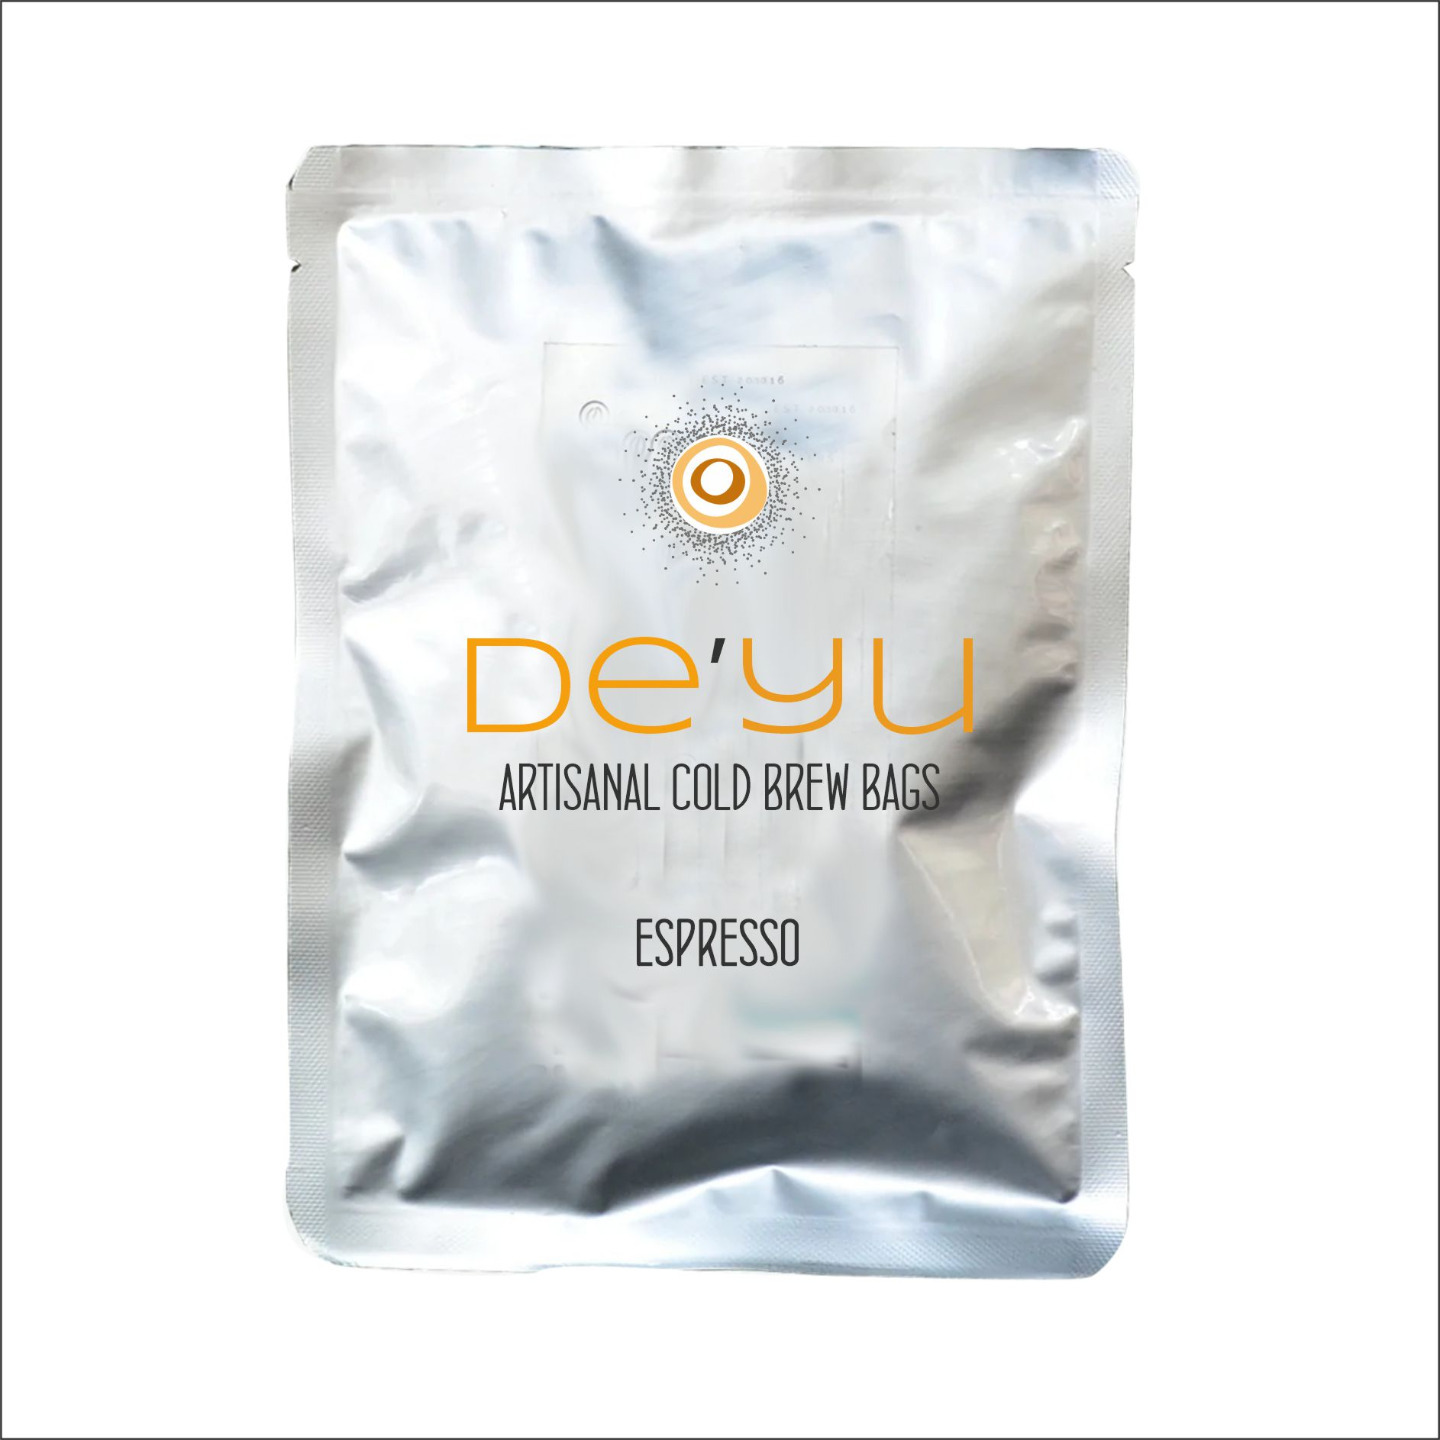 DEYU - Artisnal cold brew bags - Espresso